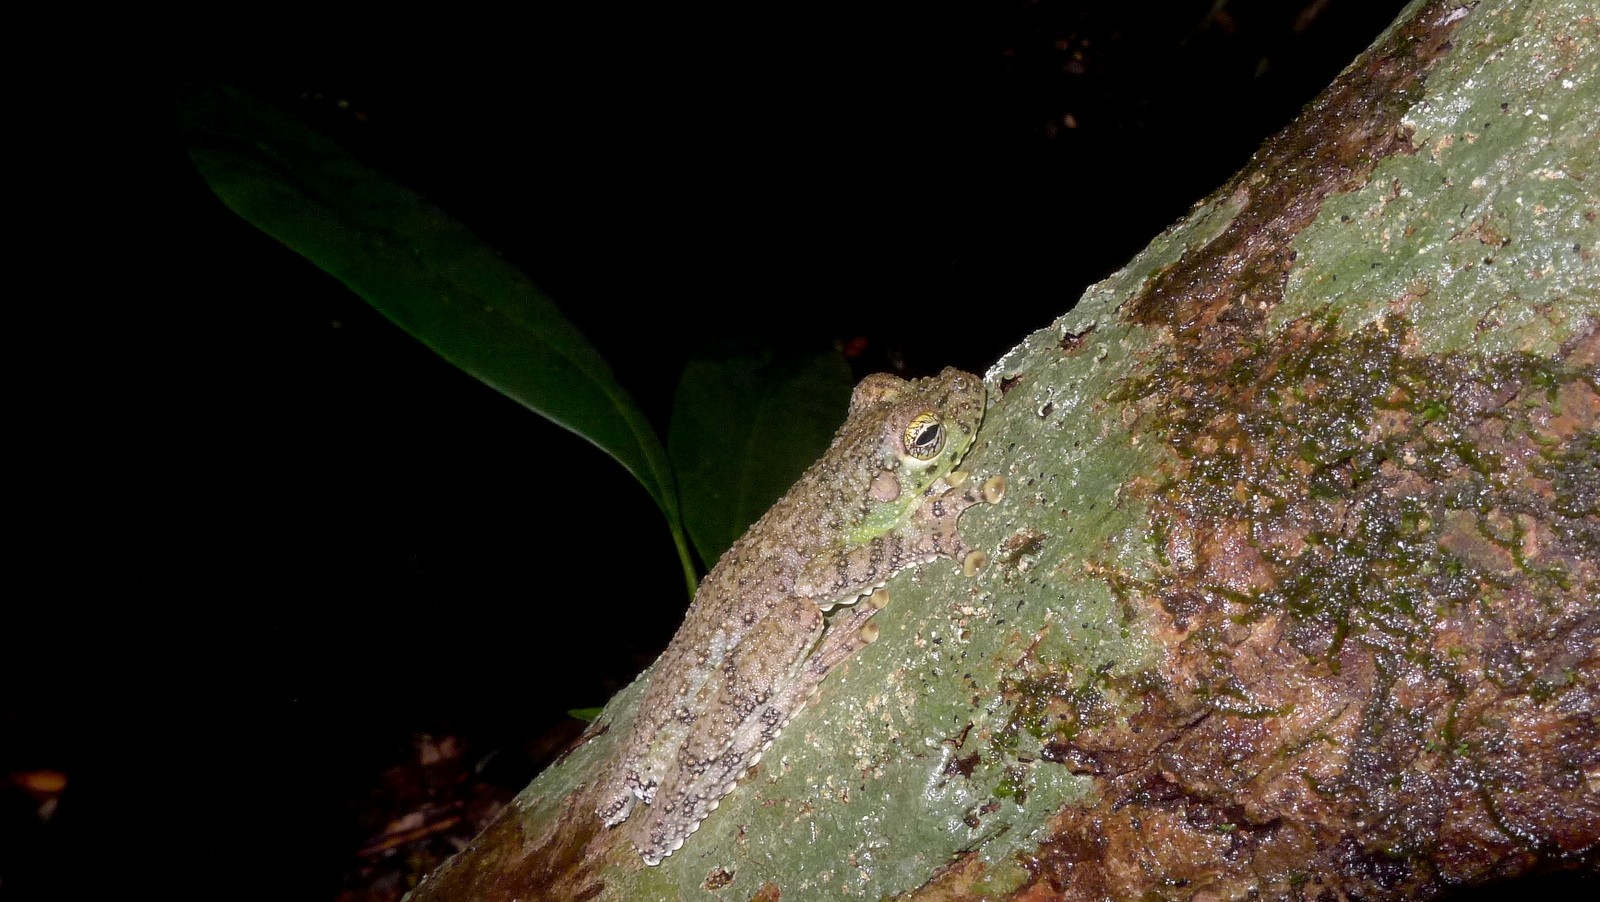 Ocellated tree frog (Itapotihyla langsdorffii)